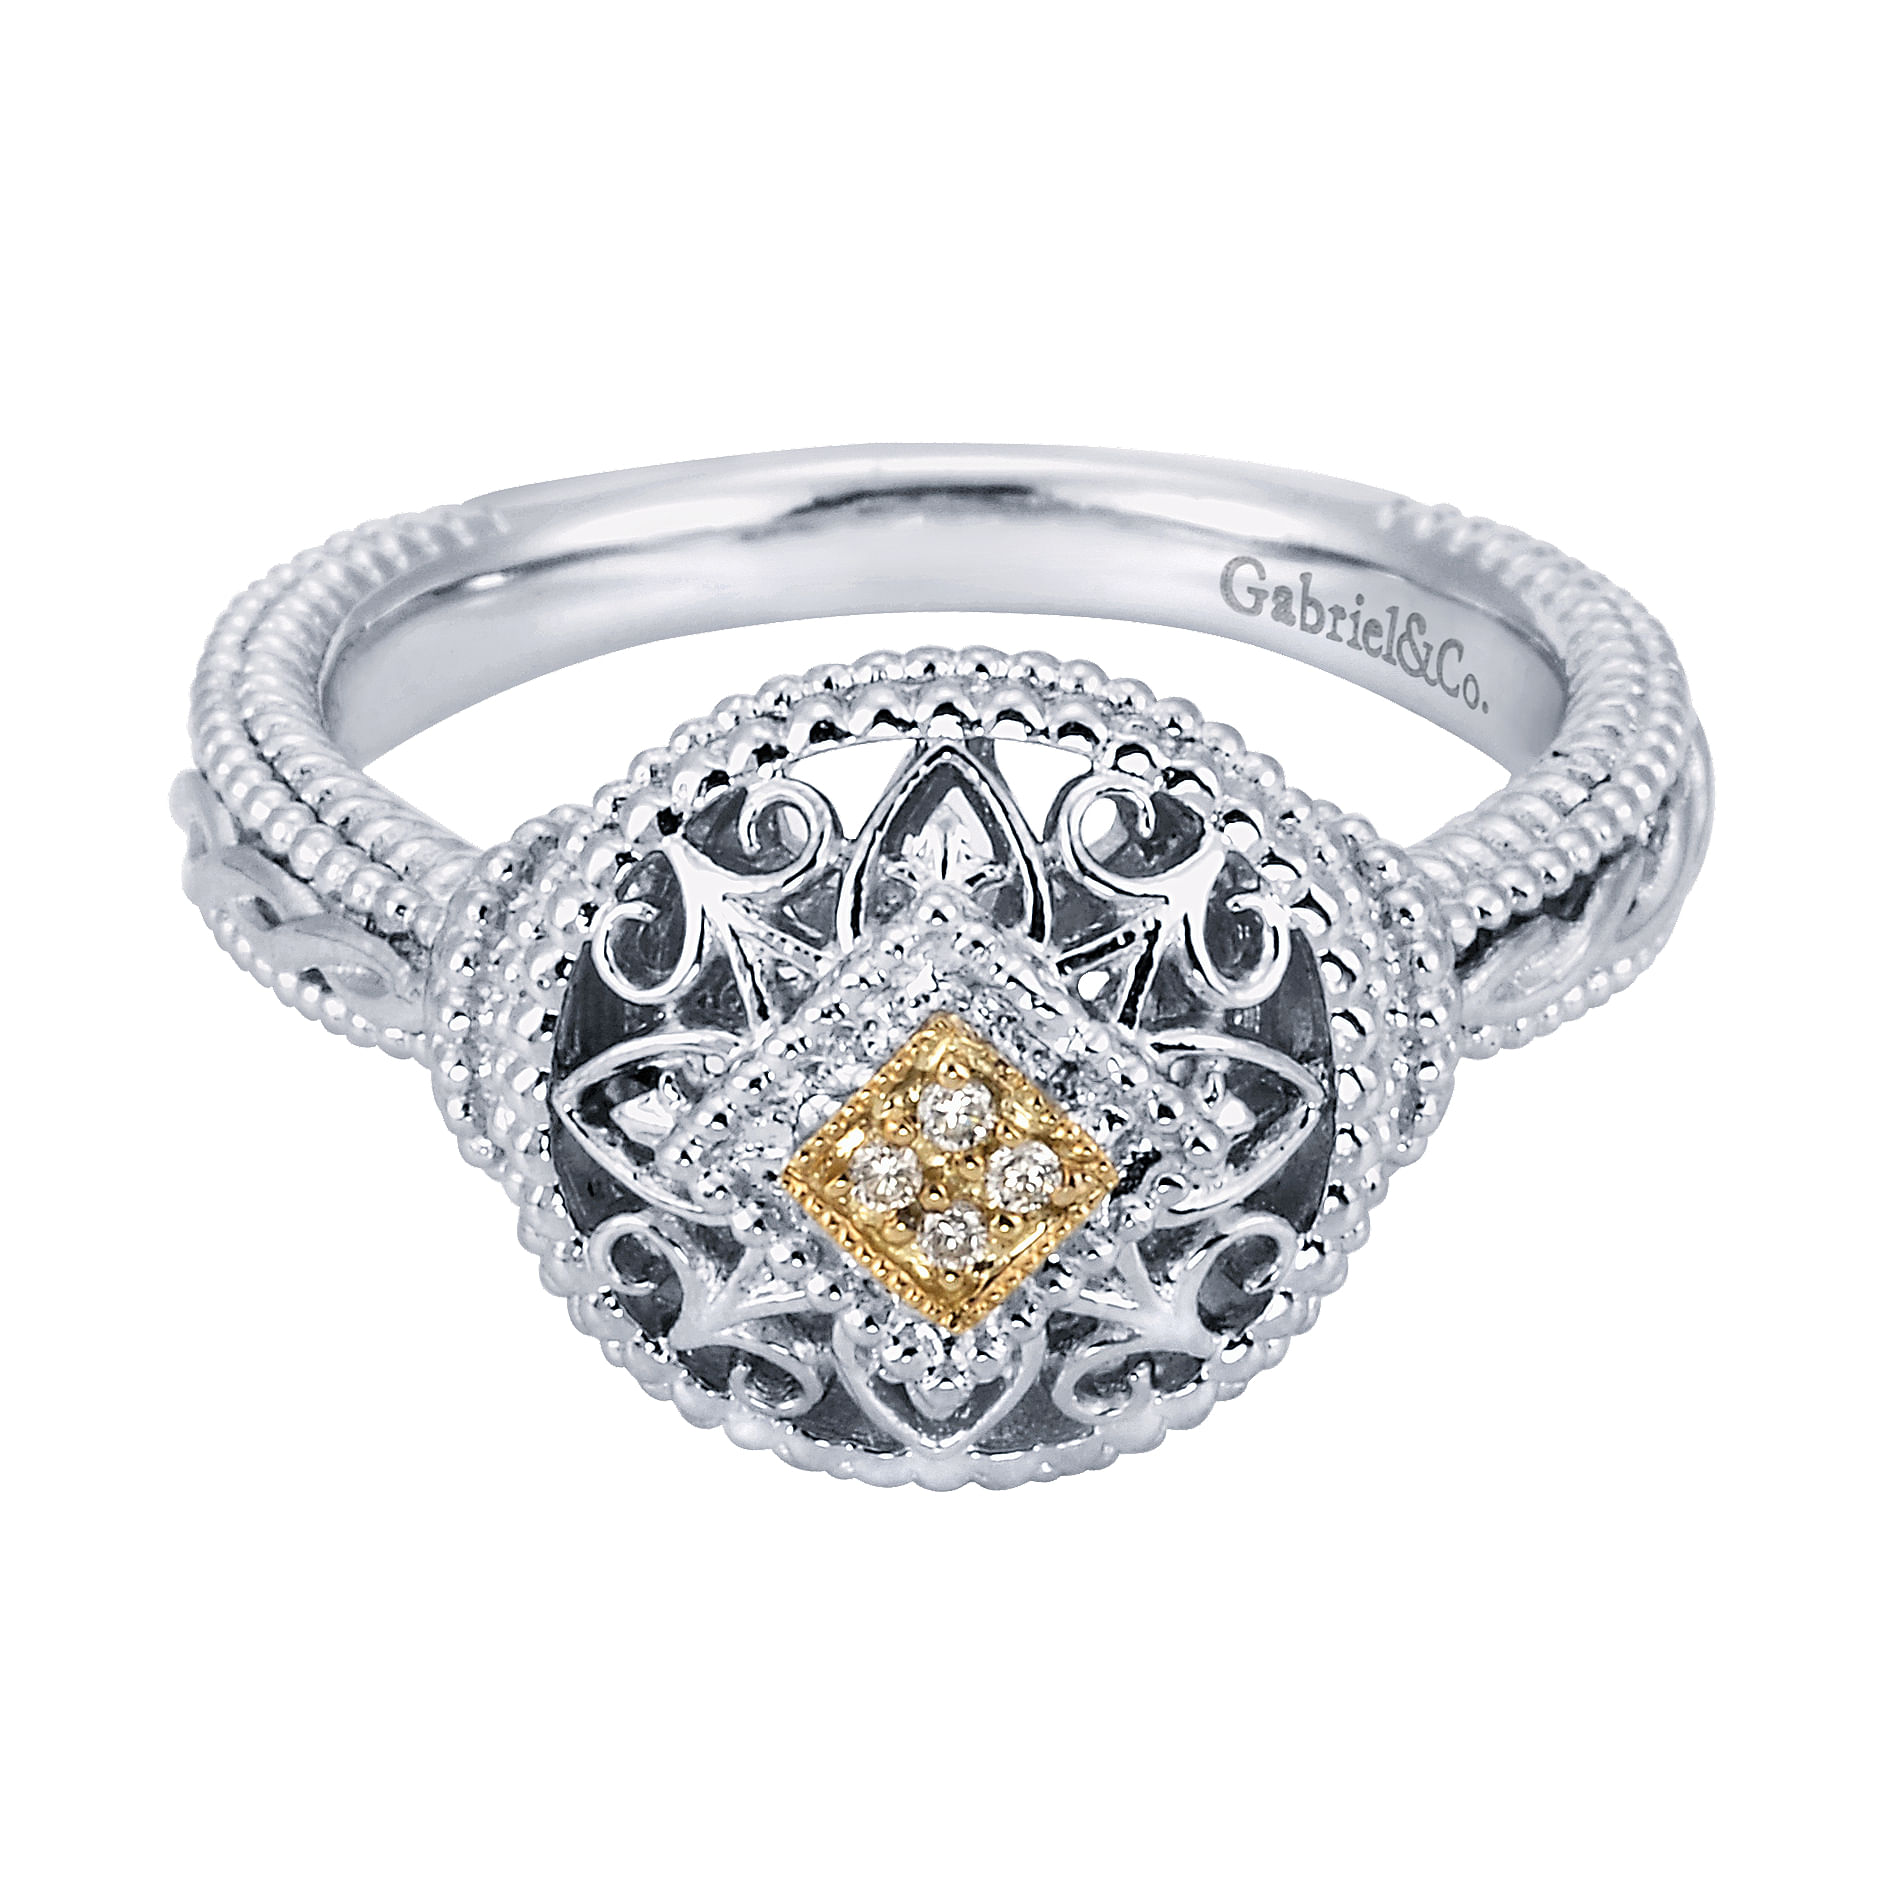 Silver-18K Yellow Gold Vintage Inspired Round Filigree Diamond Ring